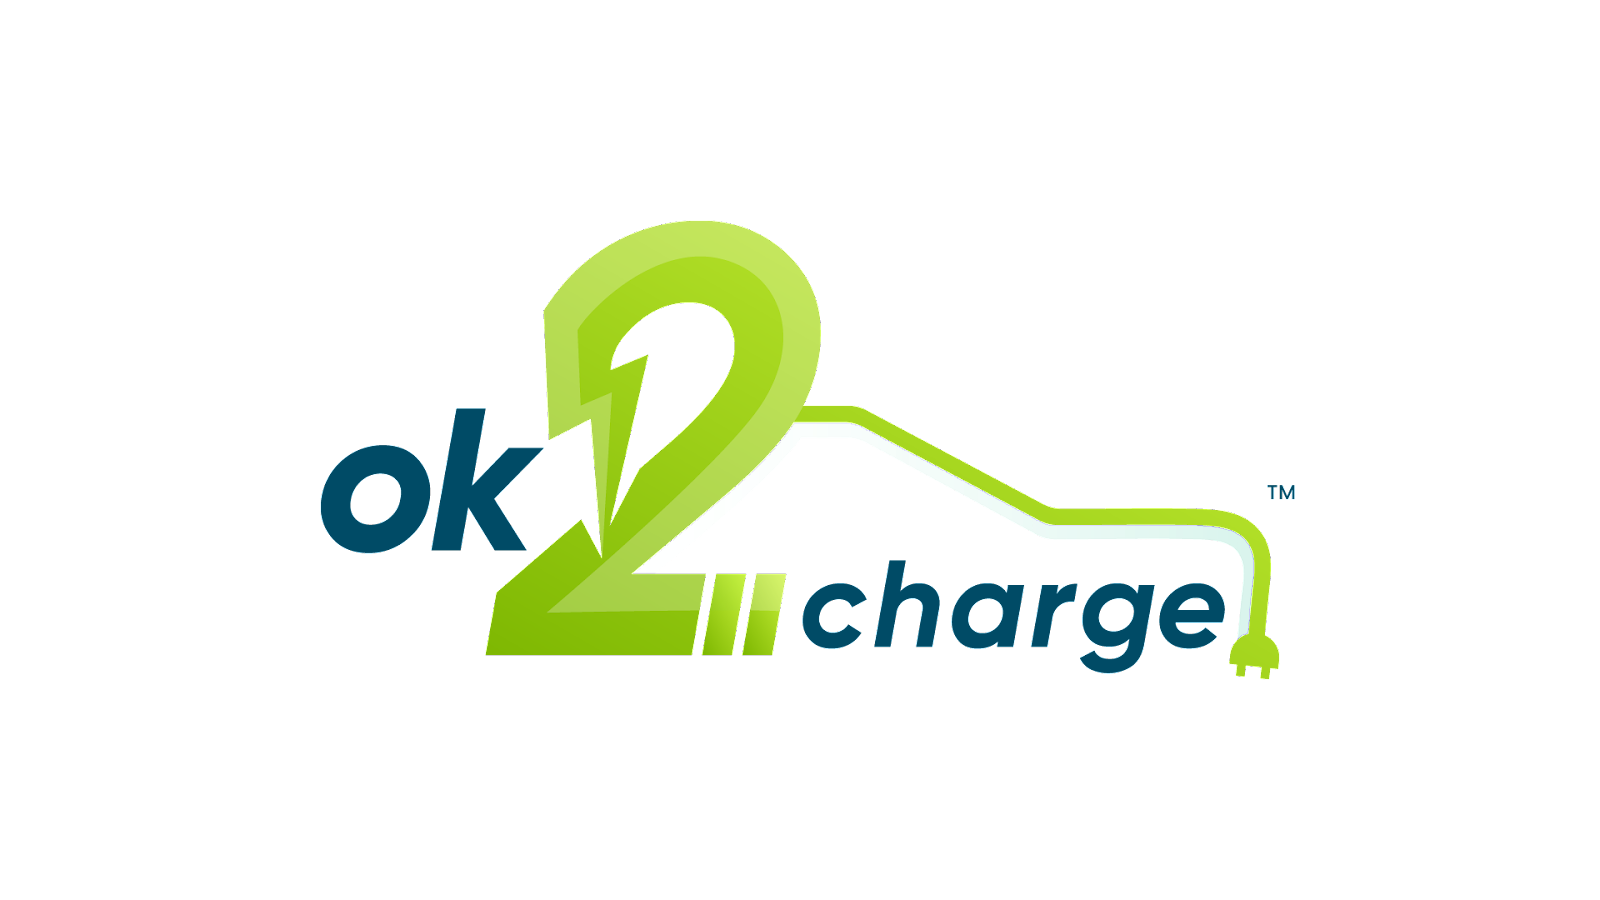 OK2Charge Logo Transparent